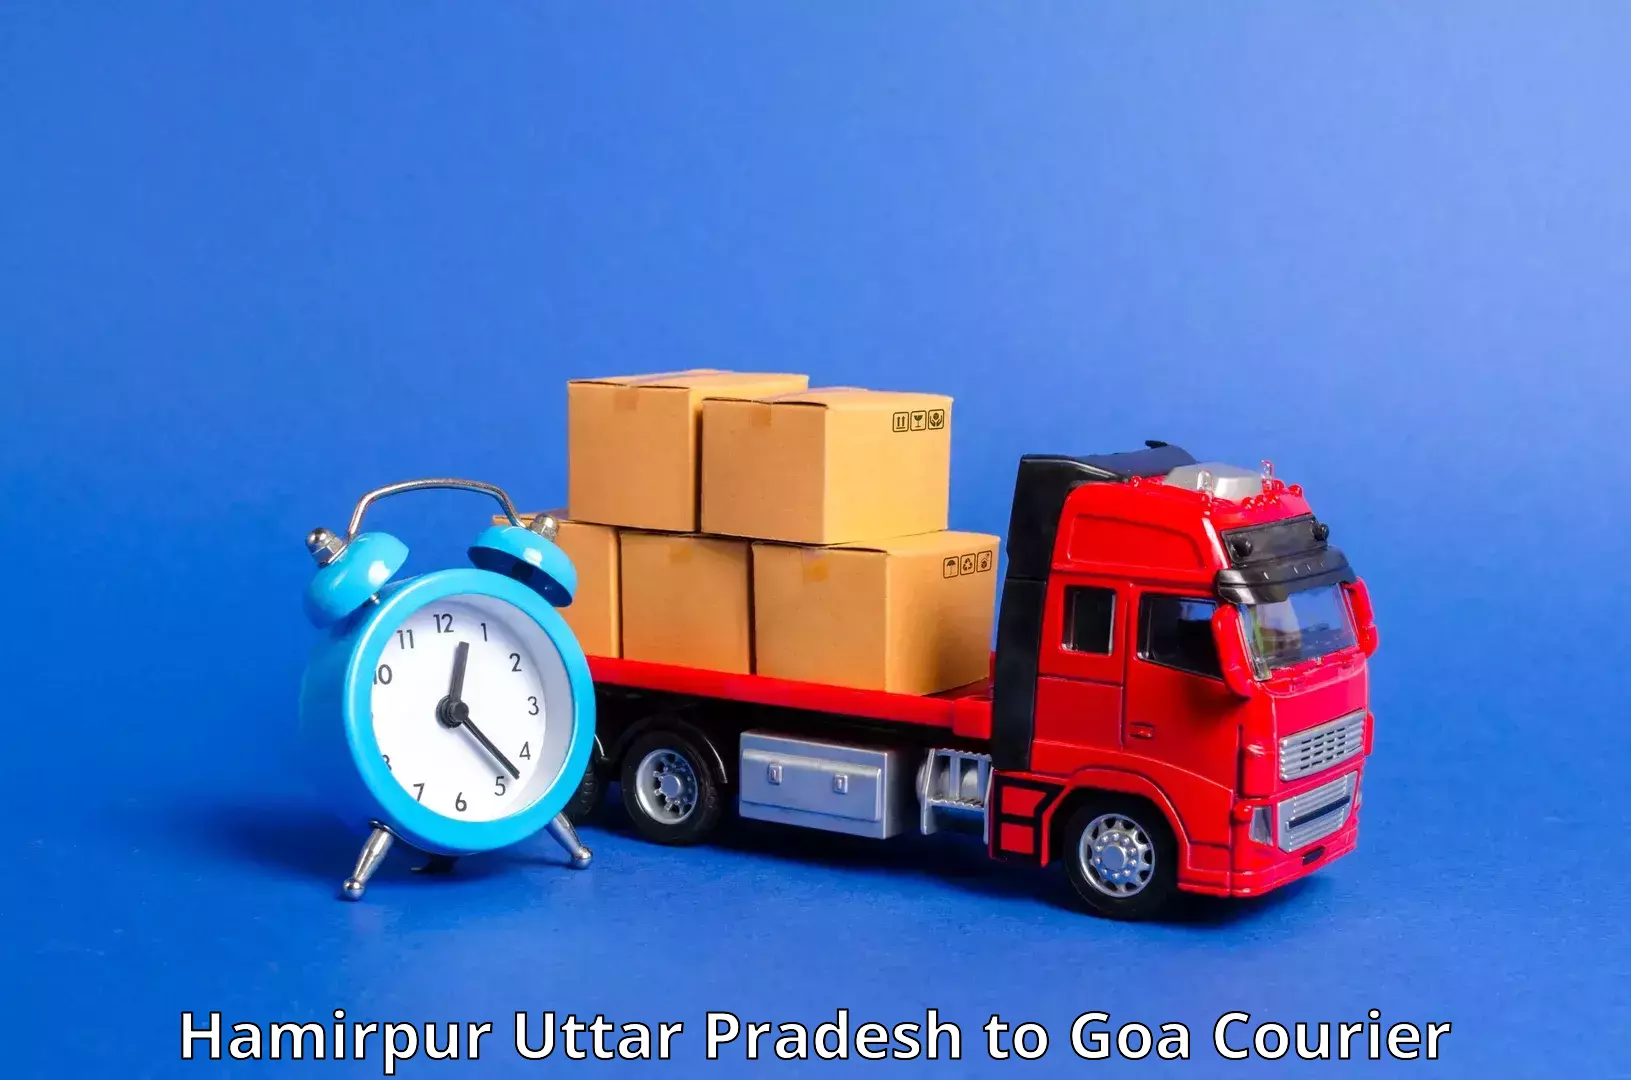 Express mail service Hamirpur Uttar Pradesh to South Goa